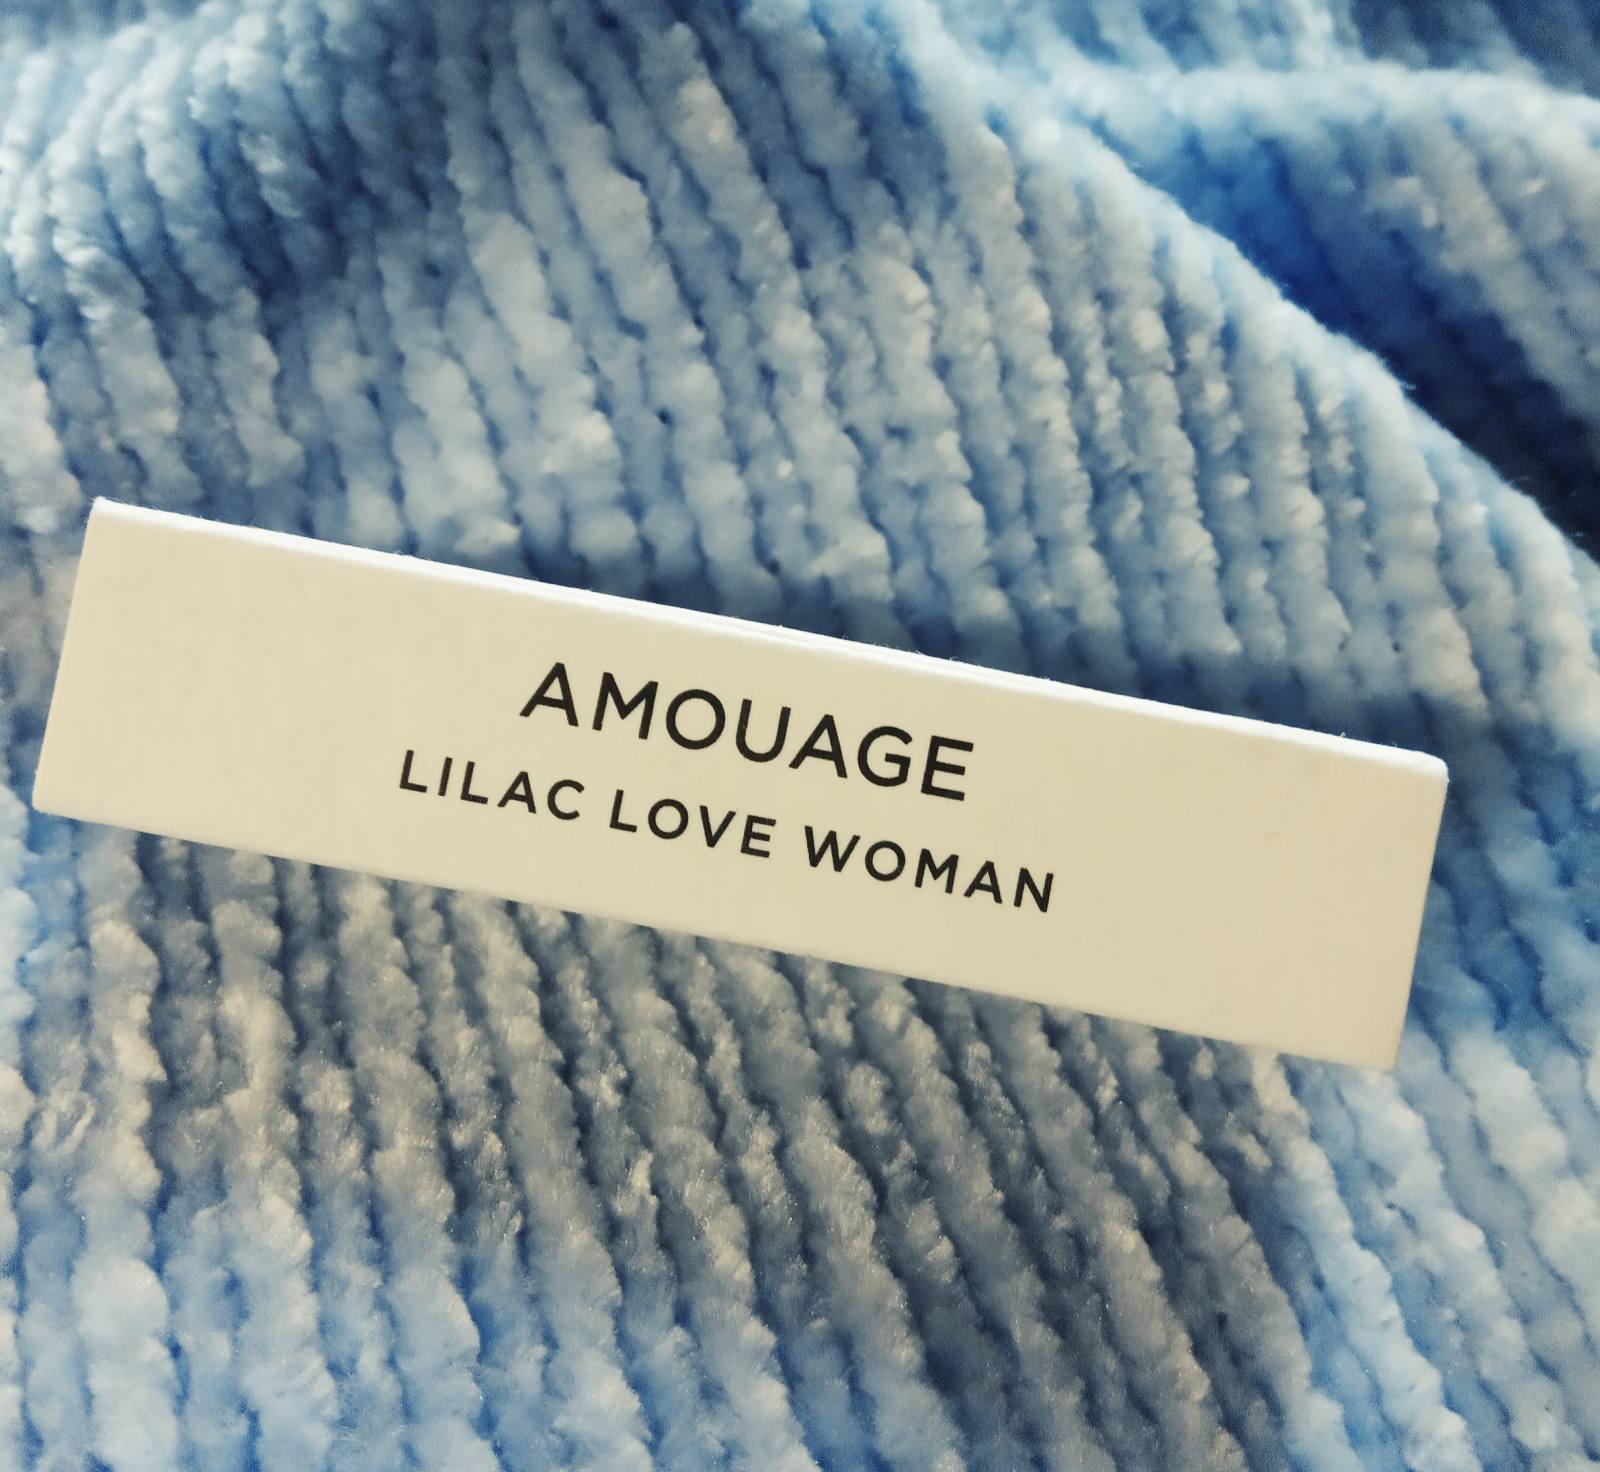 Amouage Lilac Love Woman